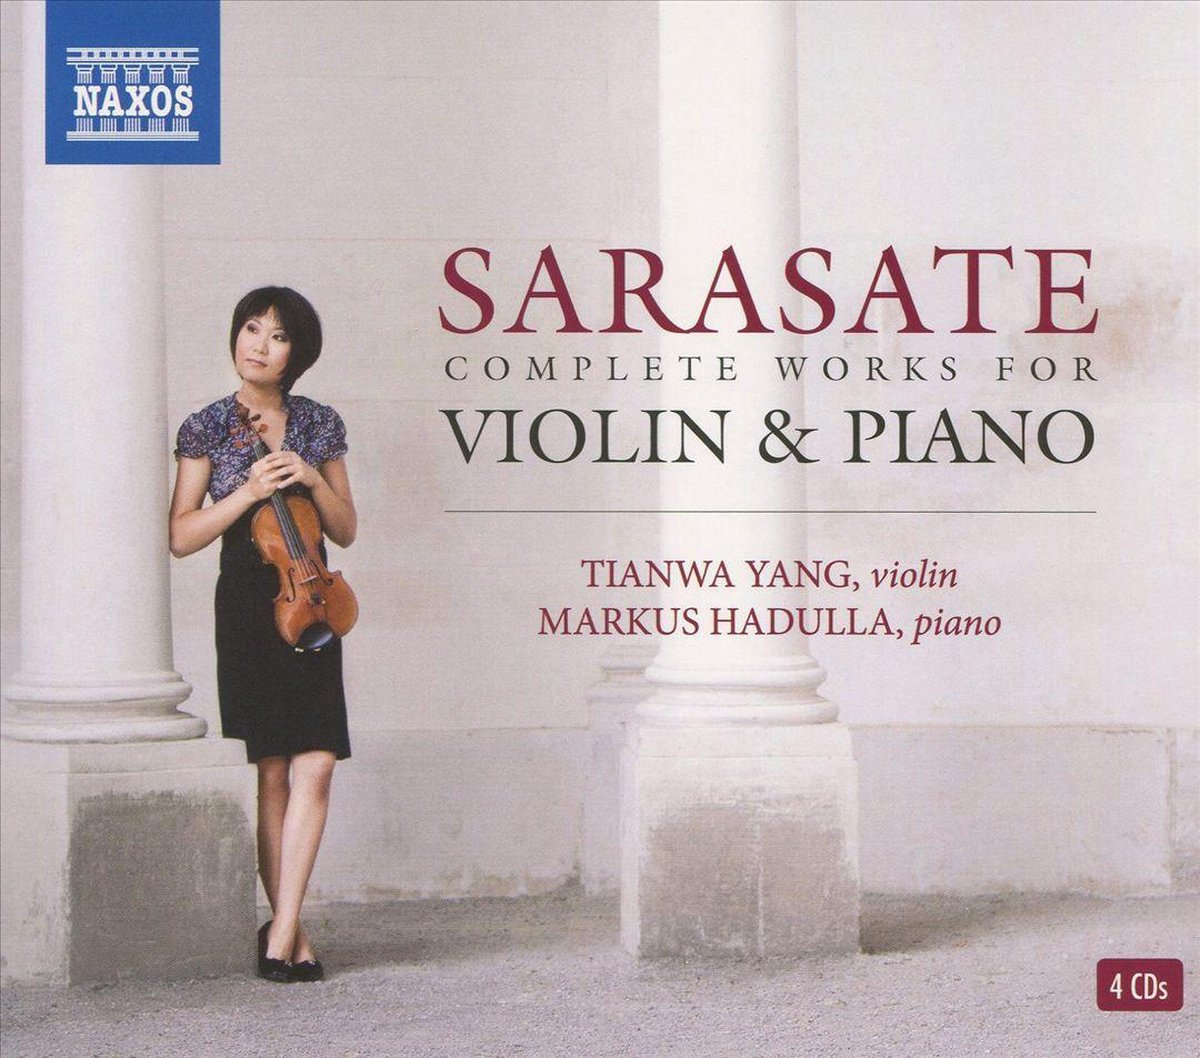 Sarasate: Complete Works for Violin & Piano | Pablo de Sarasate, Tianwa Yang, Markus Hadulla